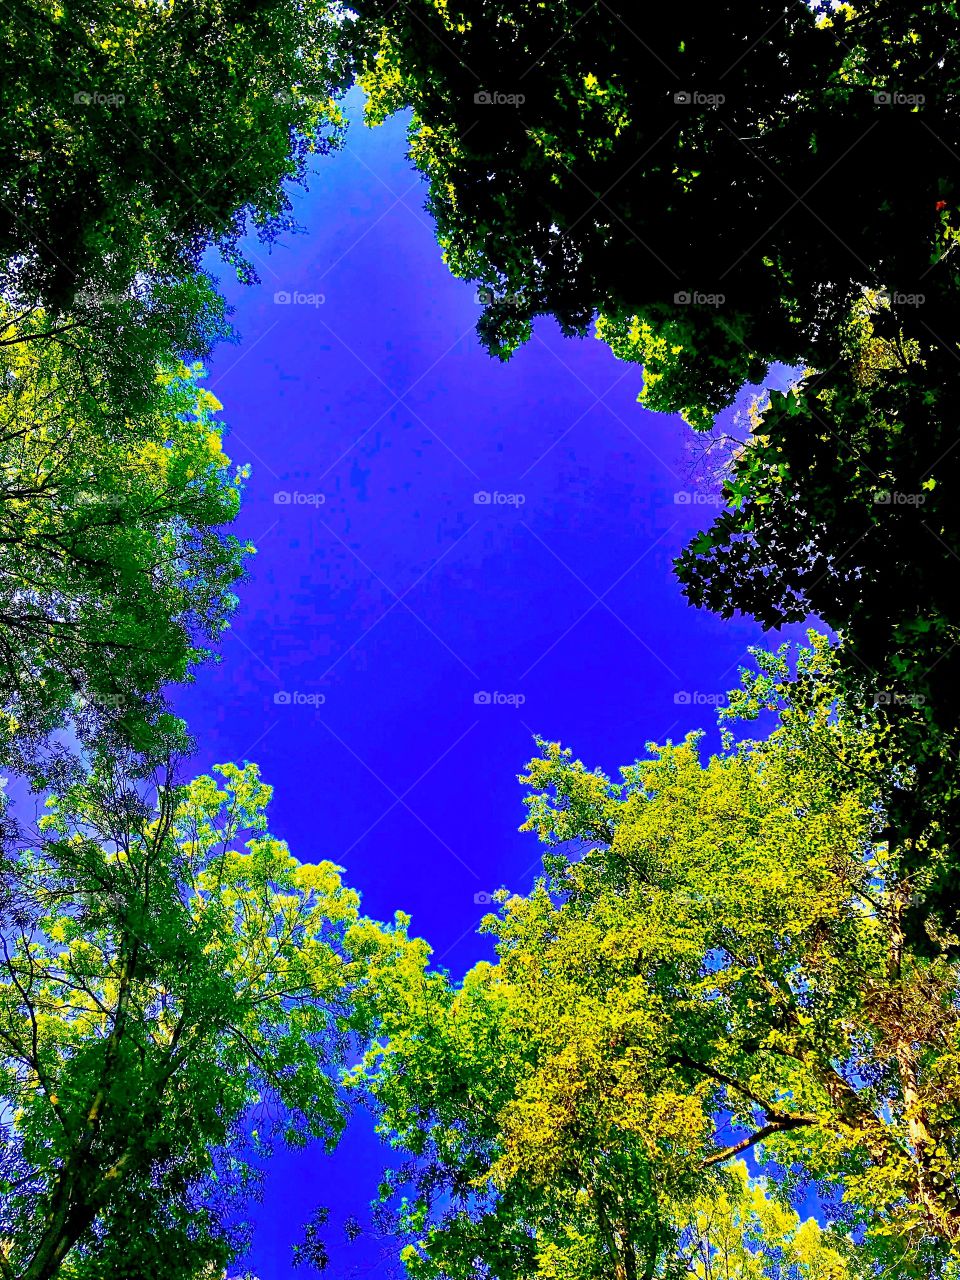 blue sky among the trees